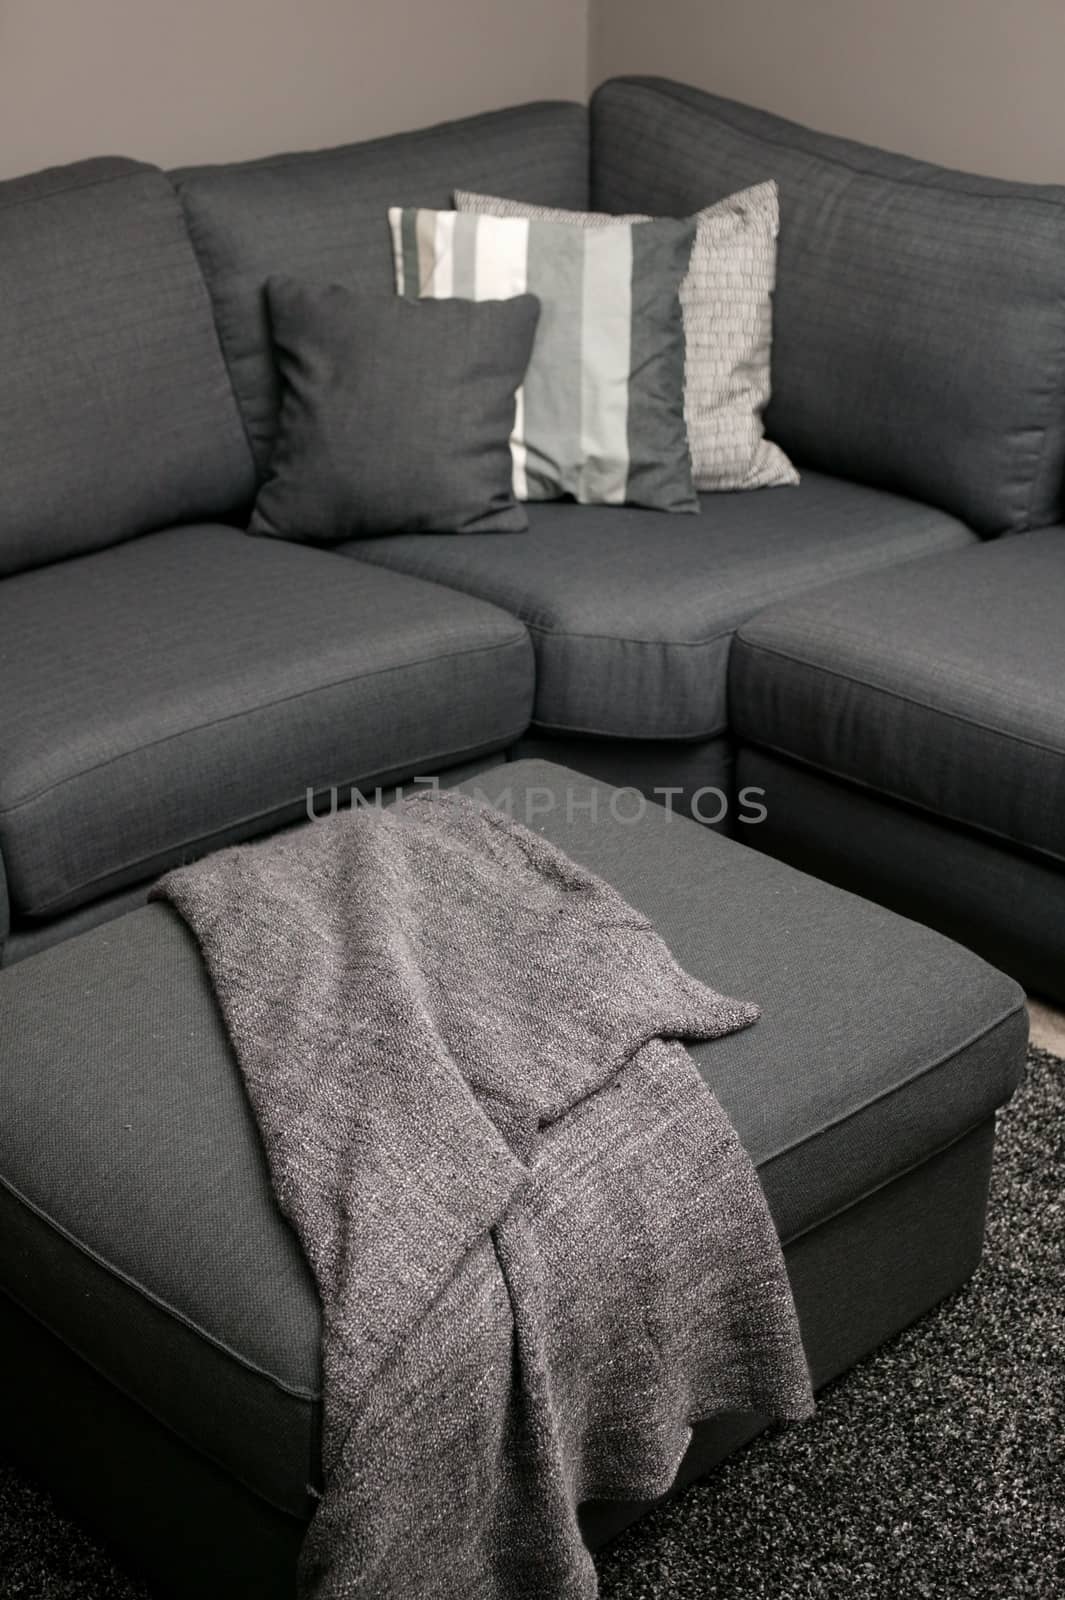 An interior shot of a lounge chair